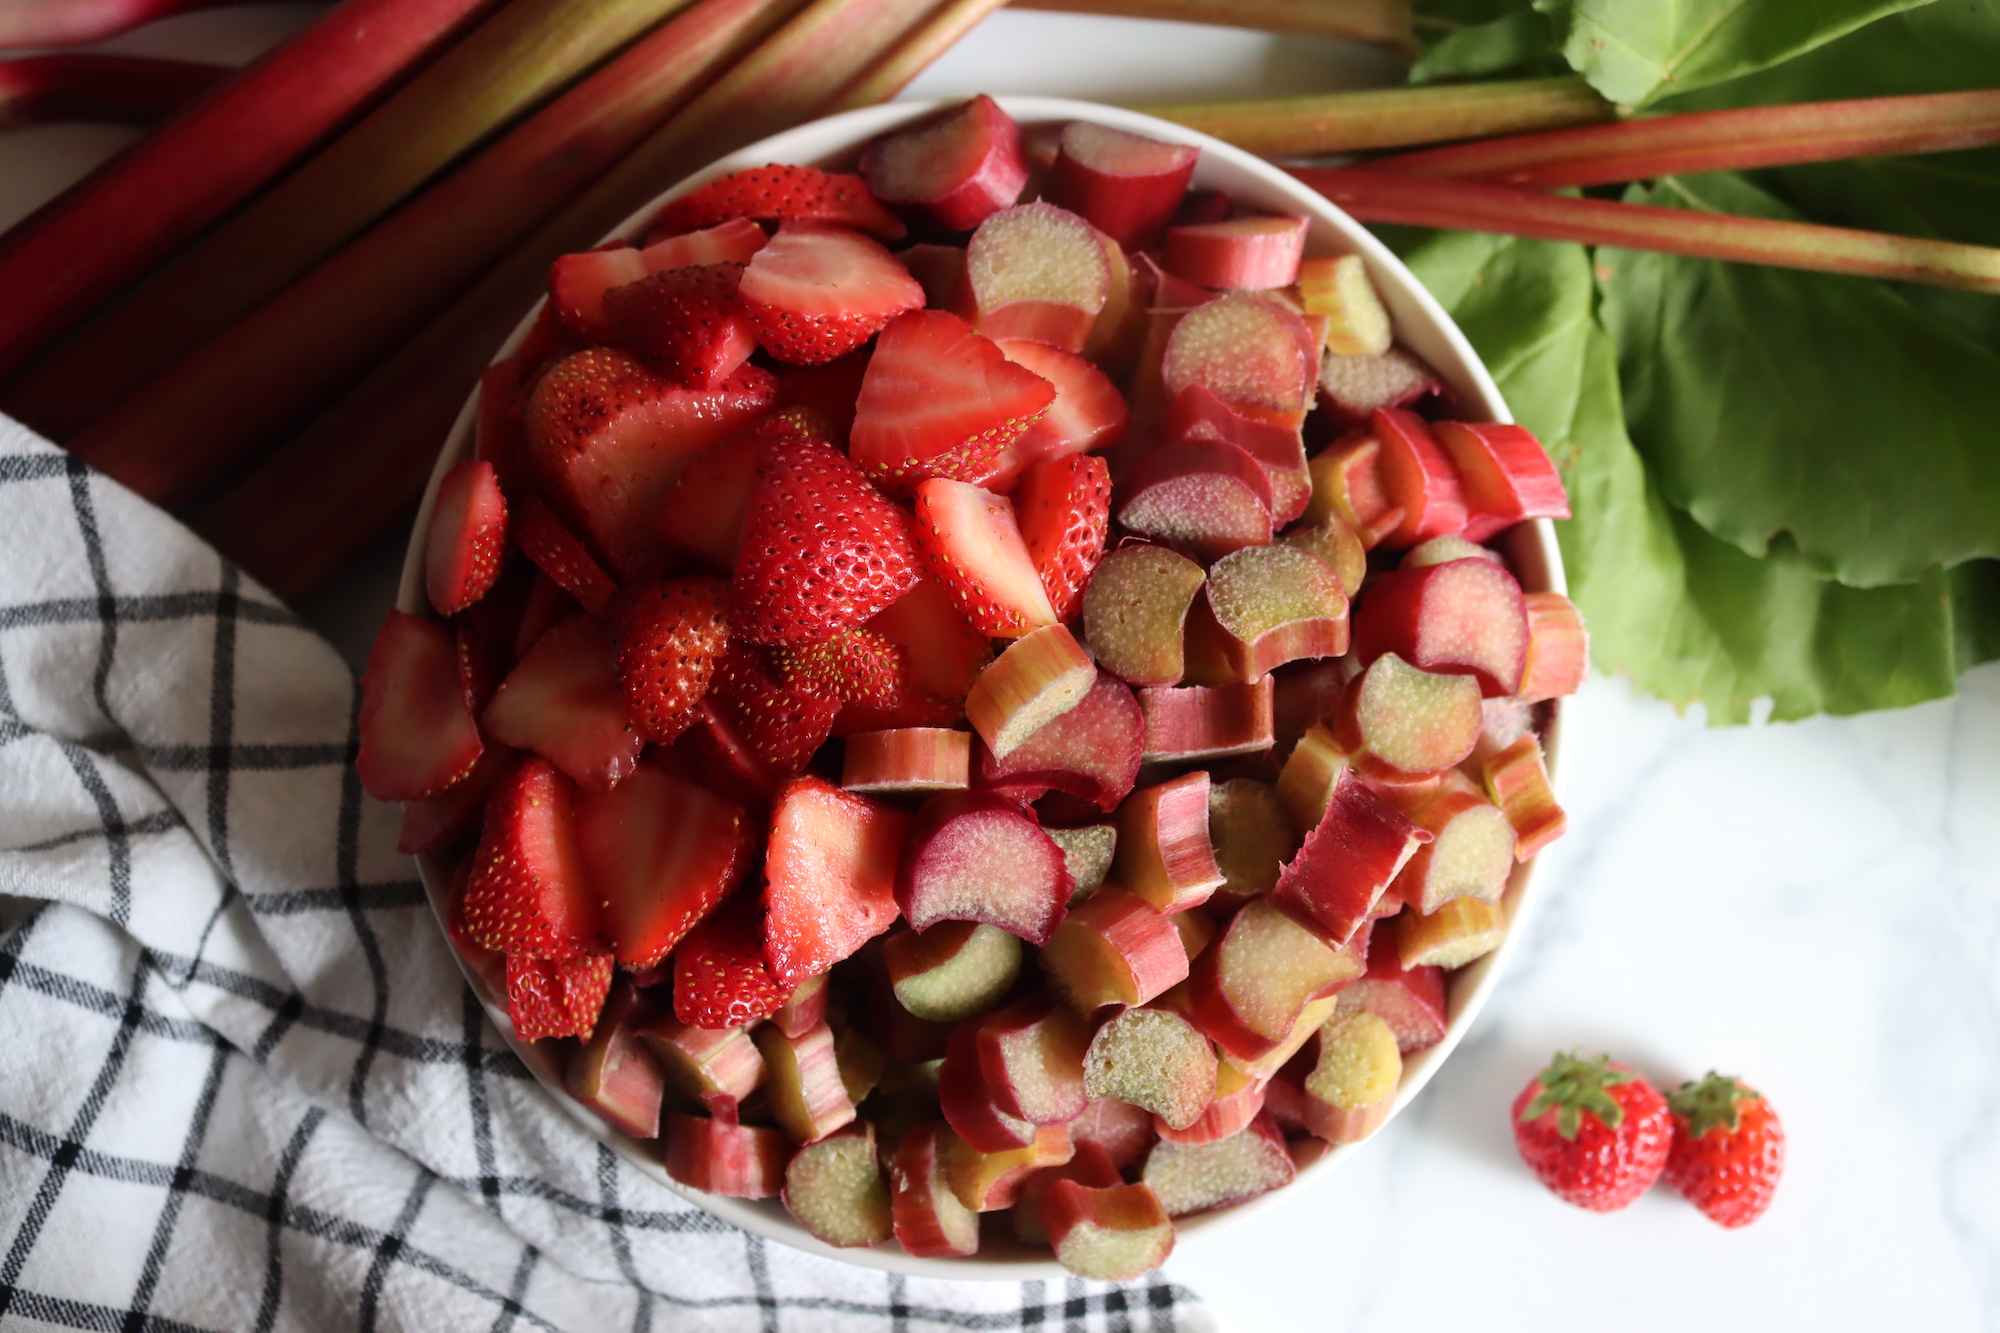 Ingredients for Strawberry Rhubarb Jam